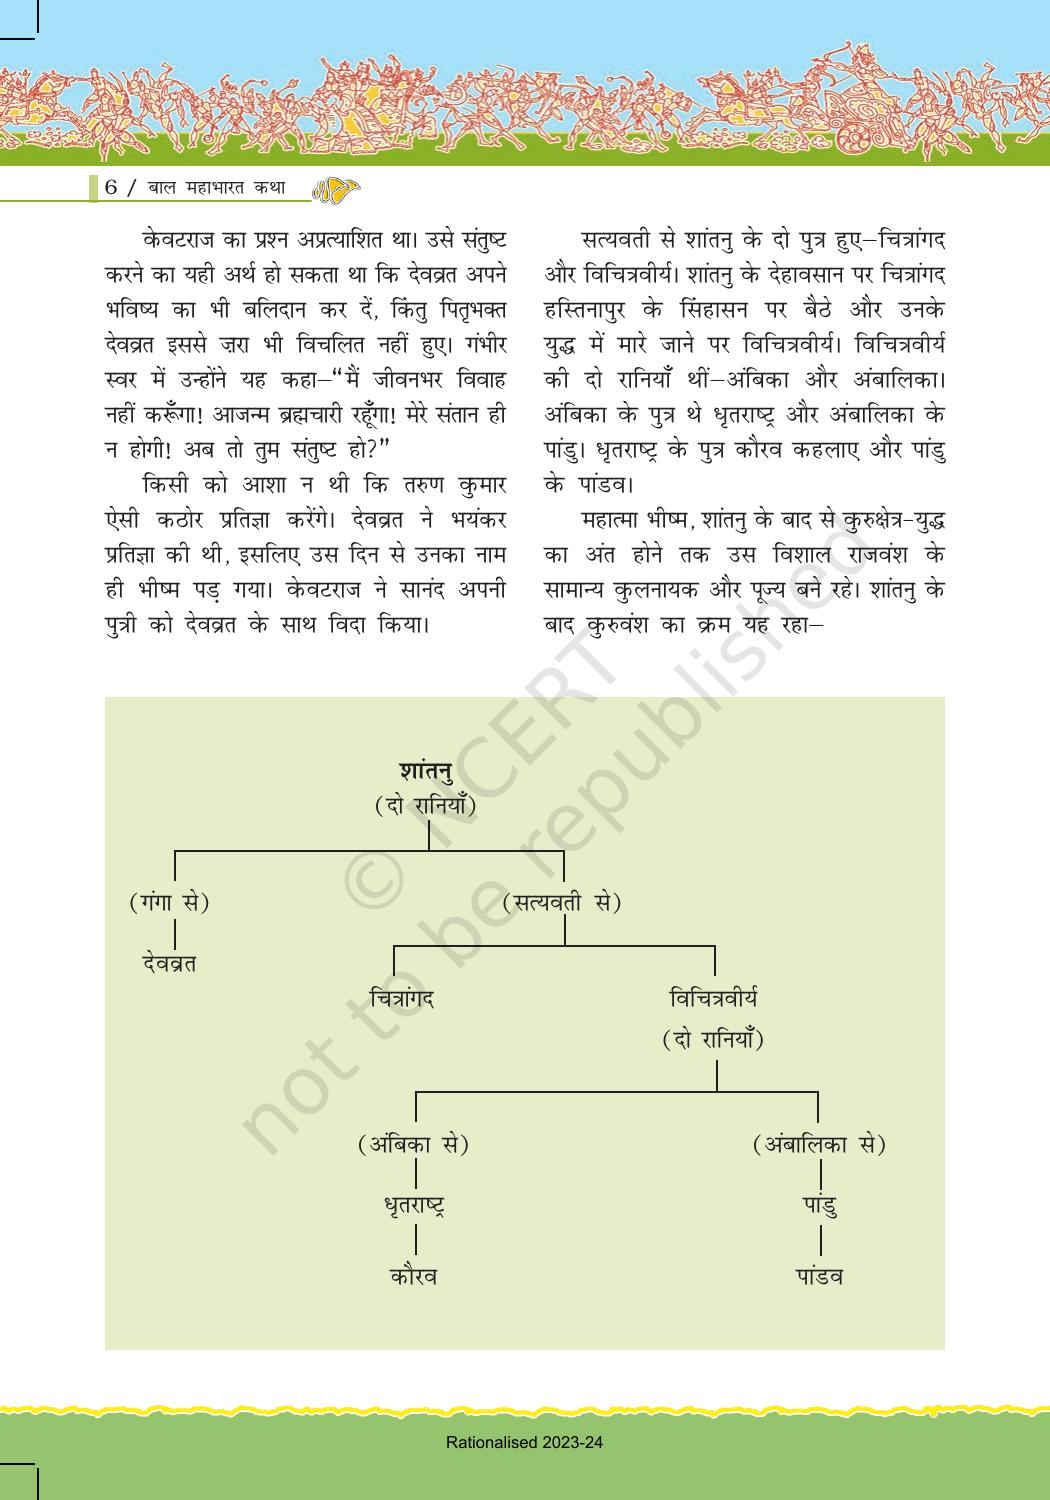 NCERT Book for Class 7 Hindi: Chapter 1-बाल महाभारत कथा - Page 6